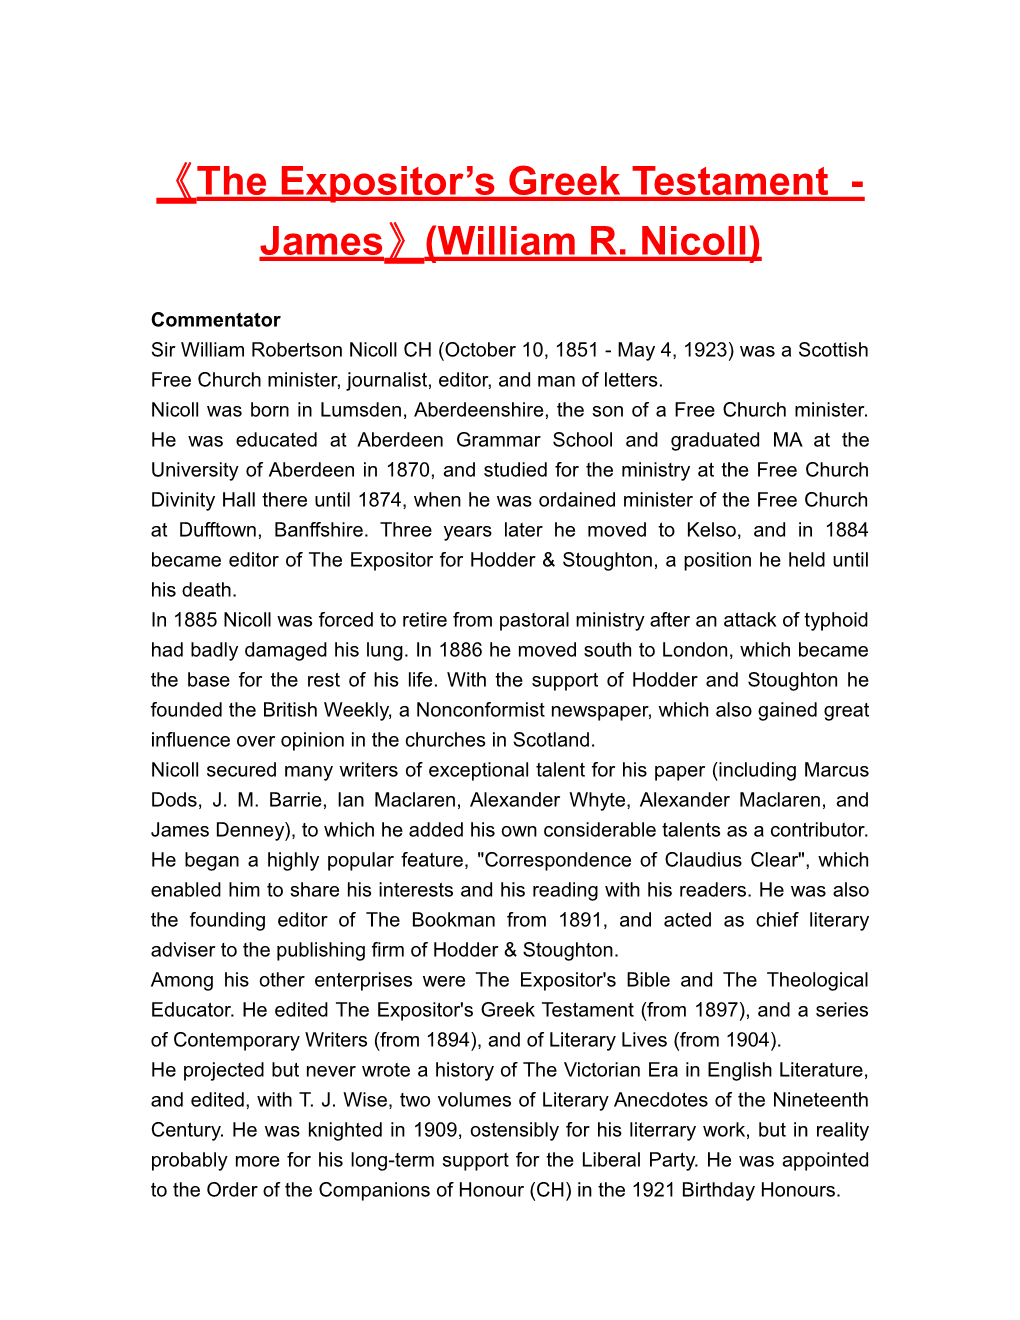 The Expositor S Greek Testament - James (William R. Nicoll)